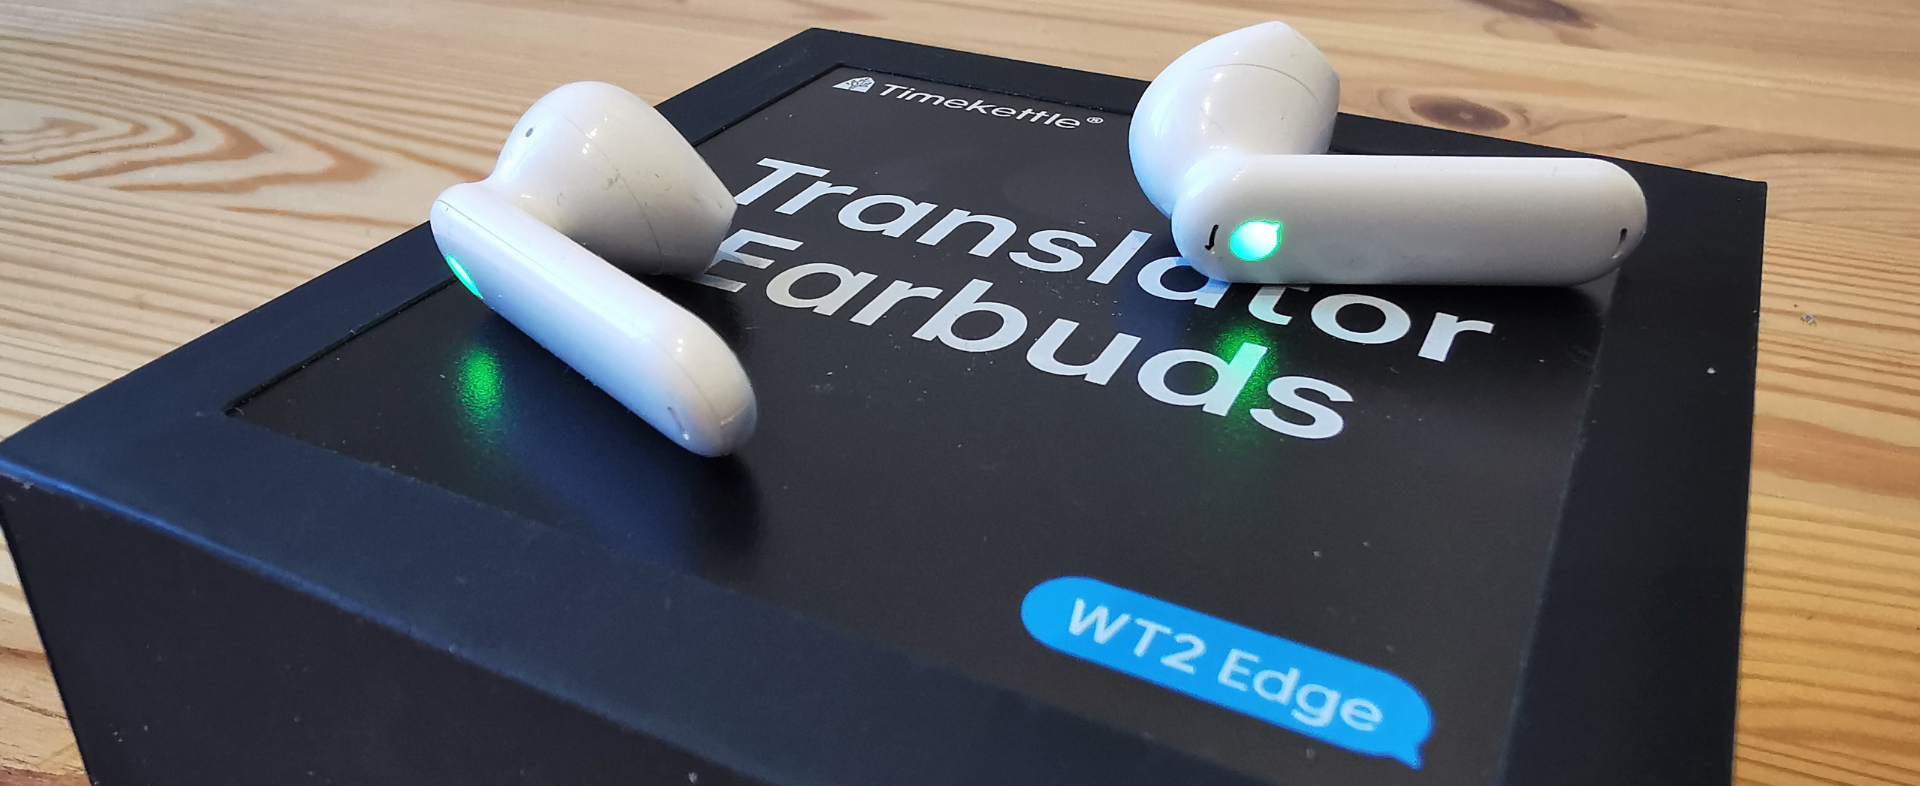 Timekettle WT2 Edge/W3 Translator Device Black Bi-Direction Simultaneous  Translation, Language Translator Device with 40 Languages & 93 Accent  Online